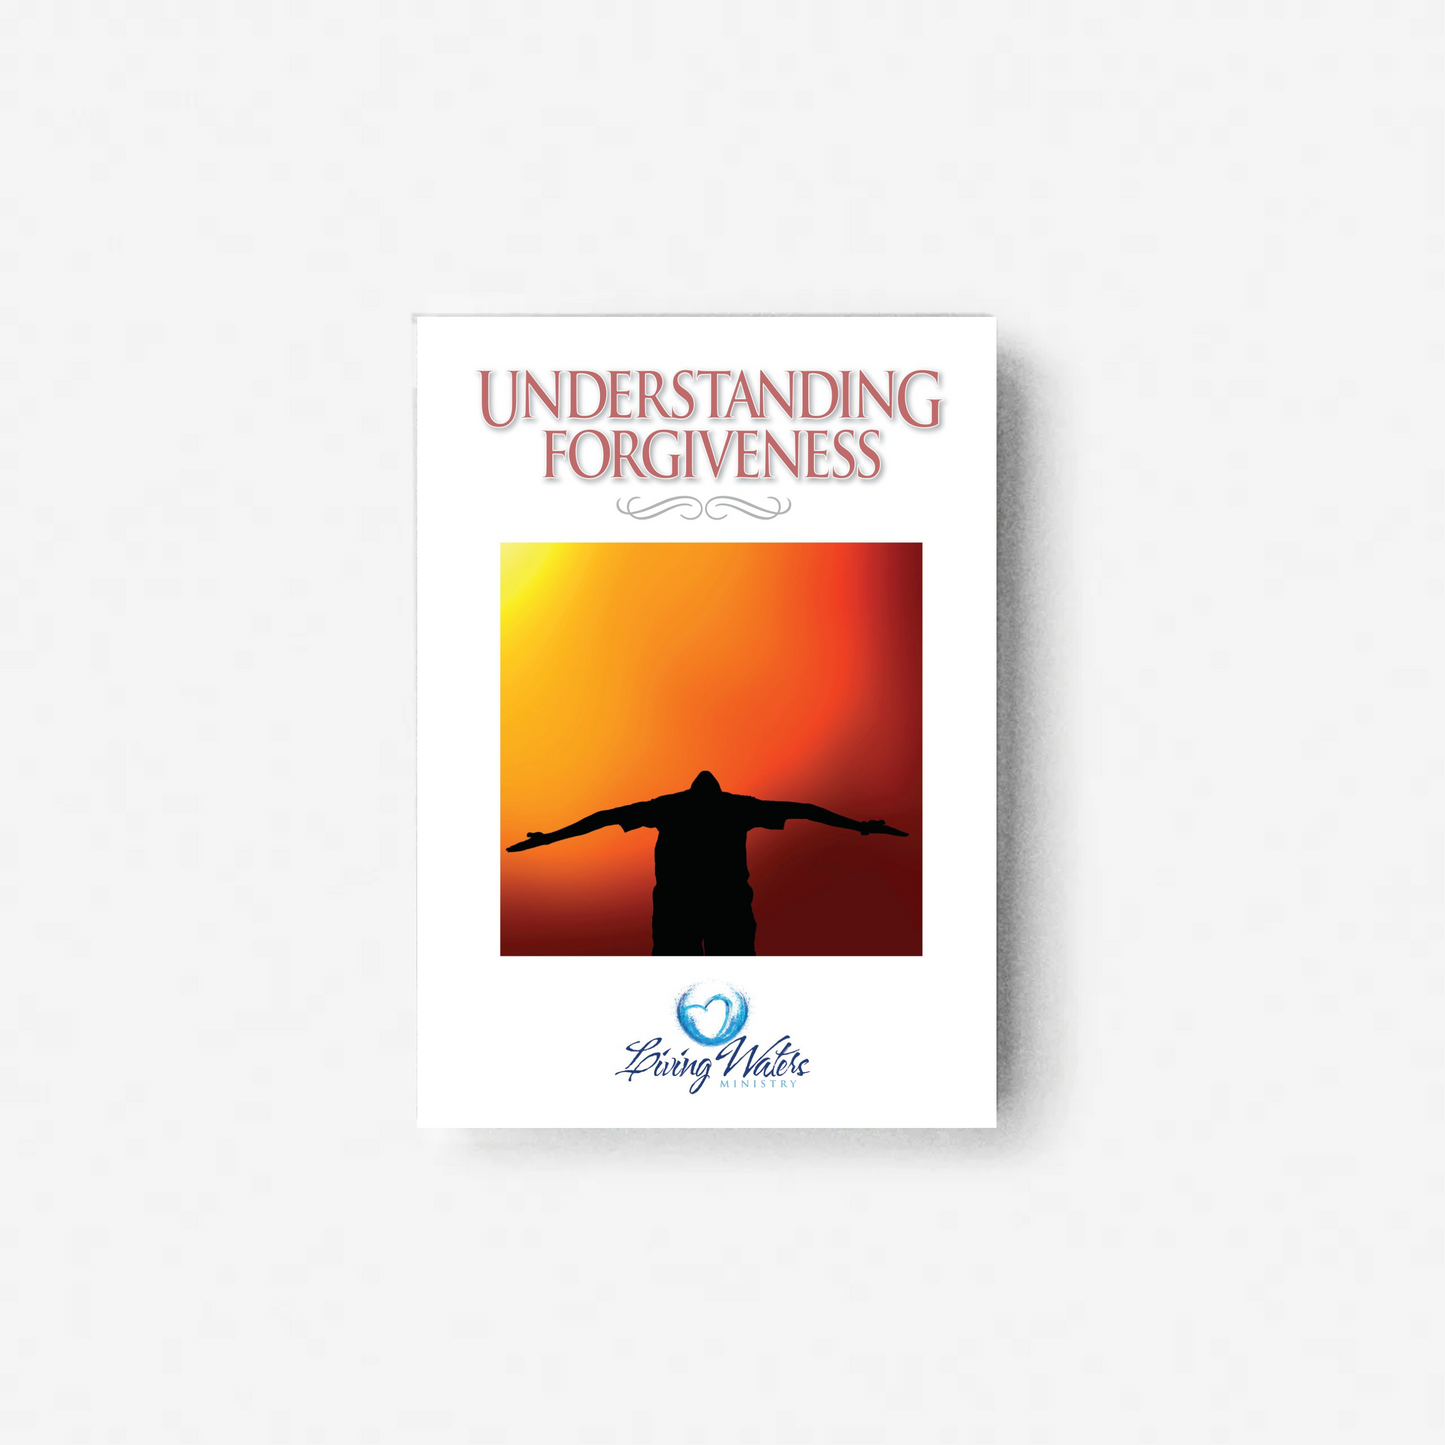 UNDERSTANDING FORGIVENESS